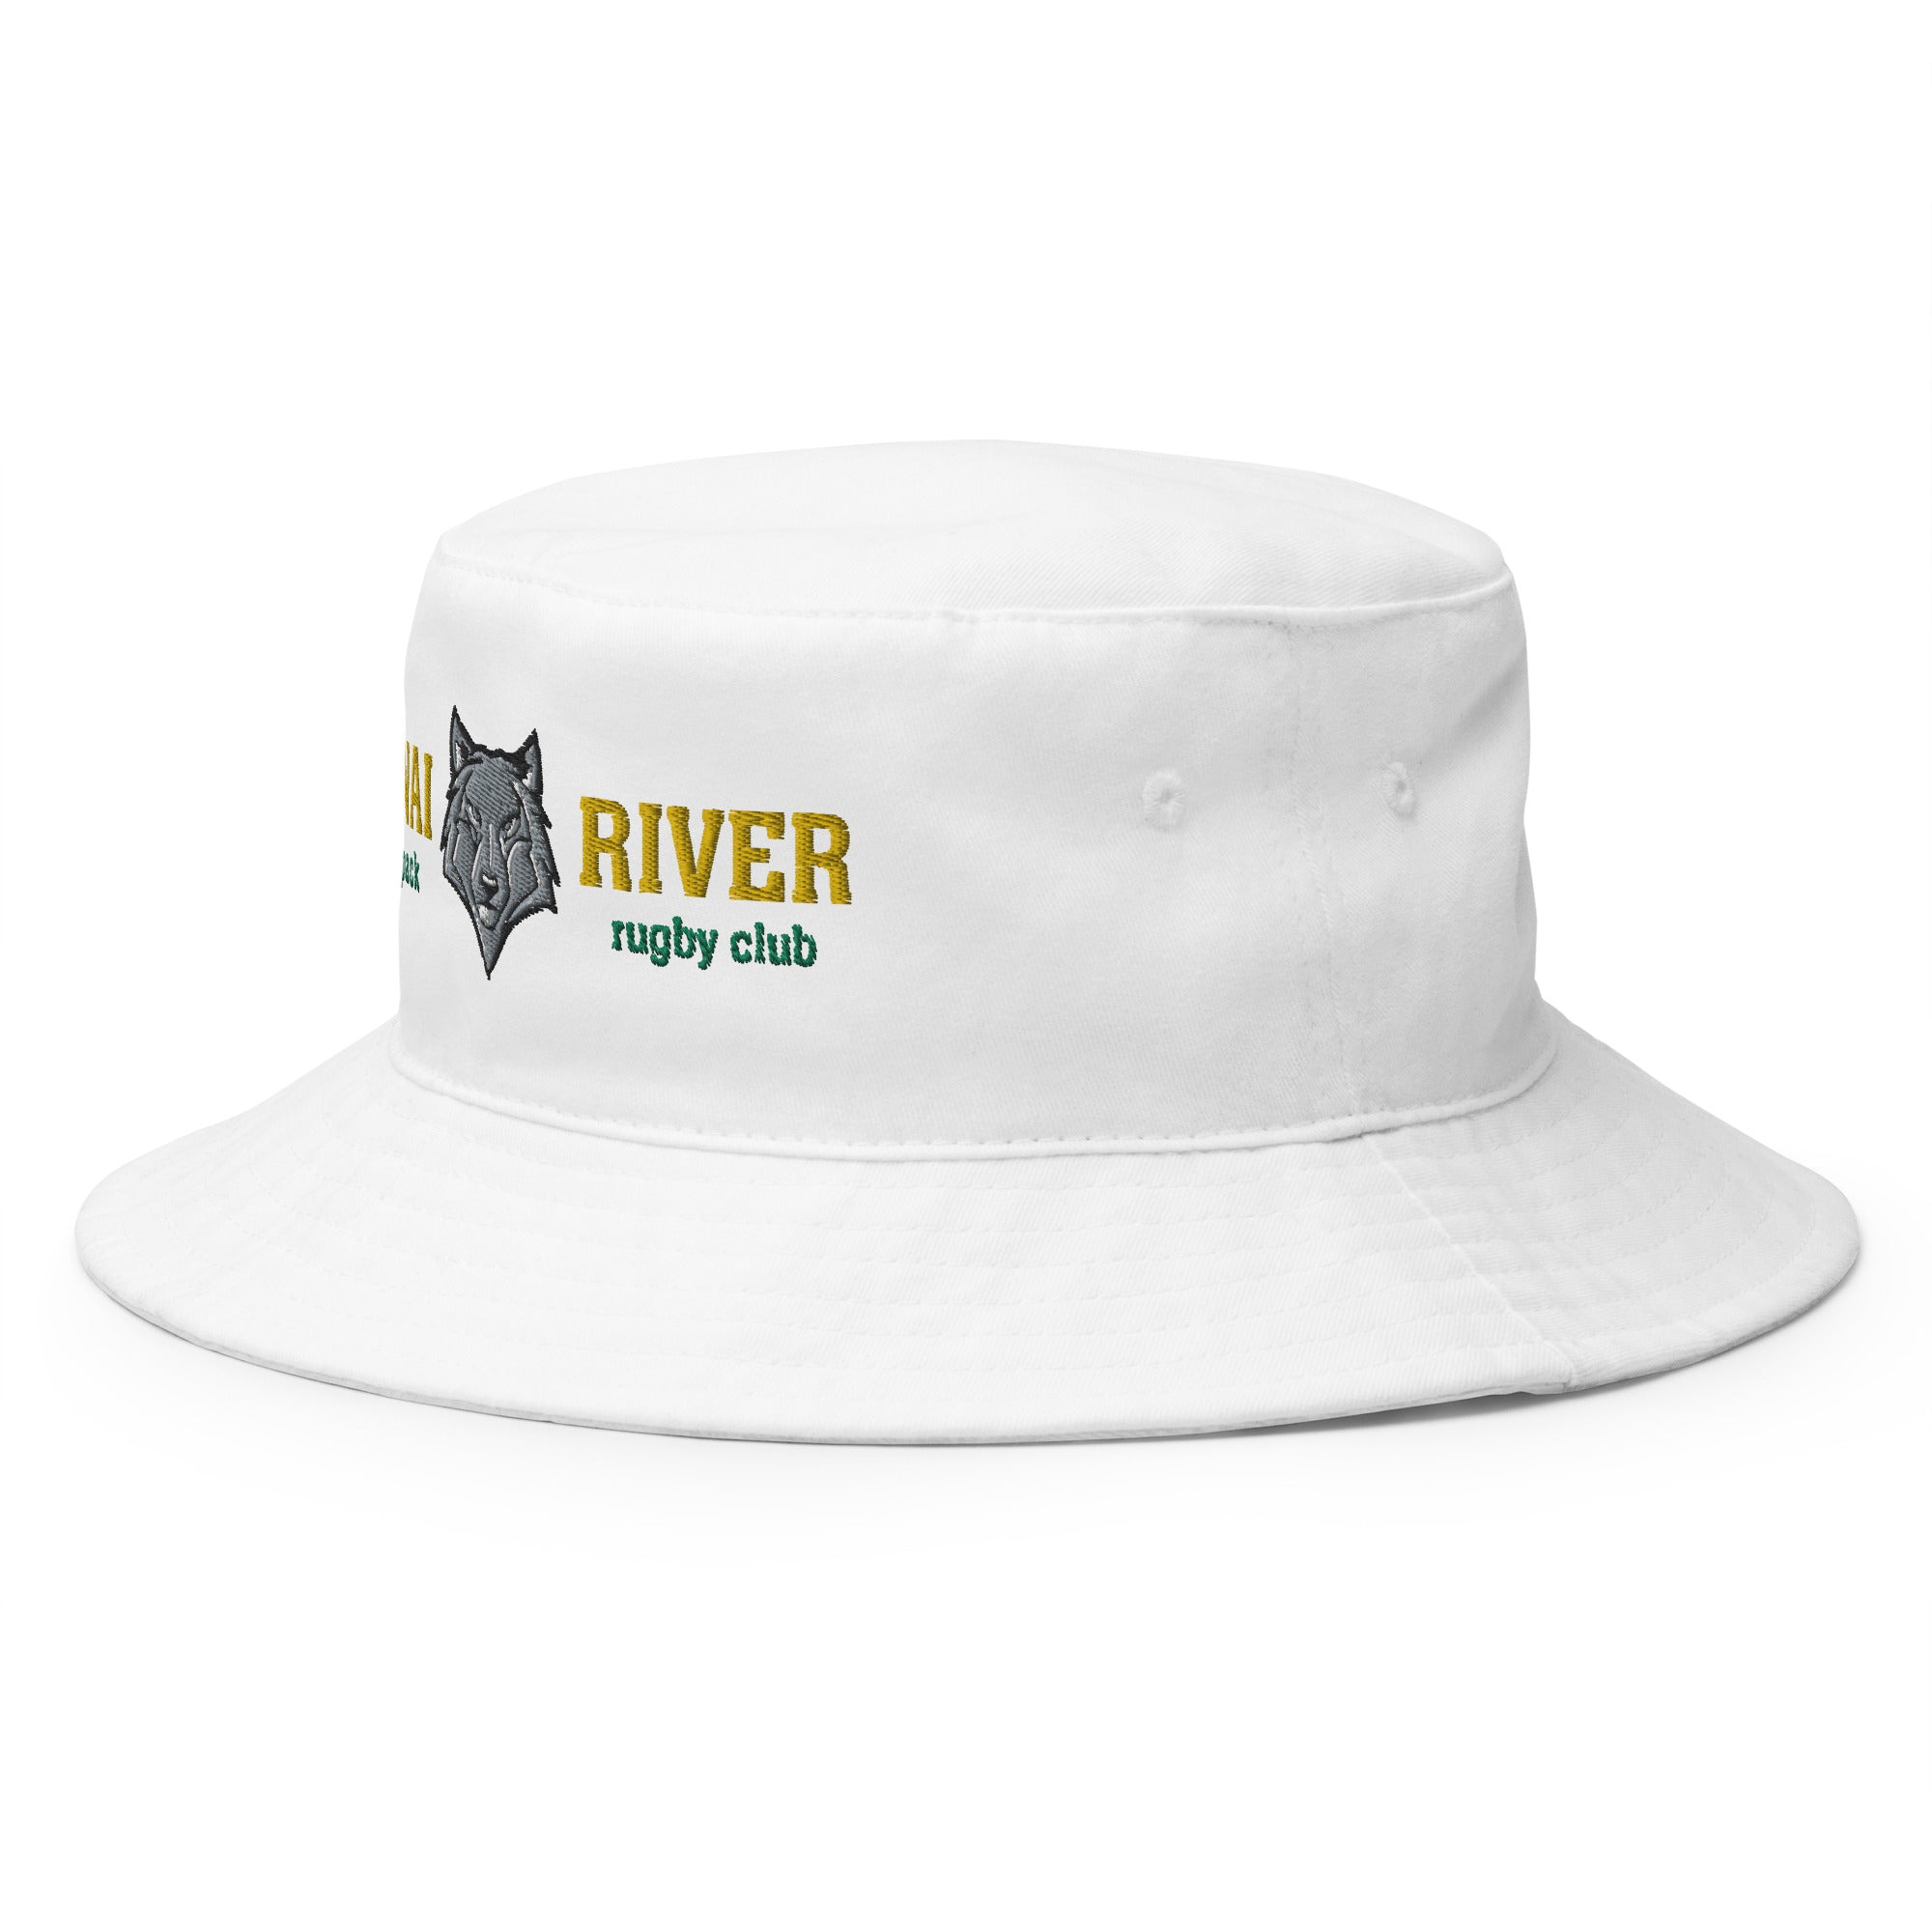 Rugby Imports Kenai River RFC Bucket Hat